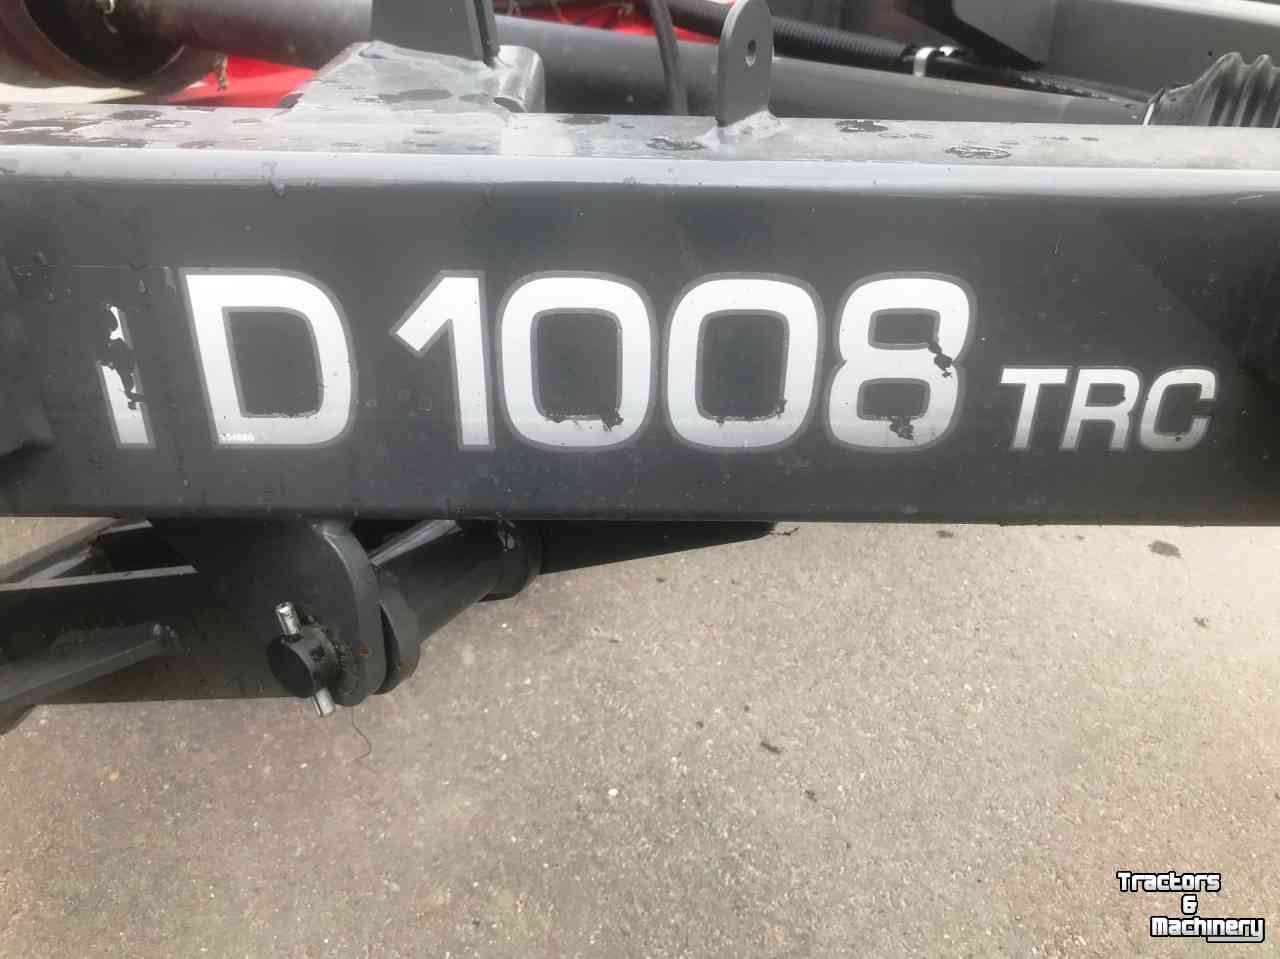 Kreiselheuer MF TD 1008 TRC